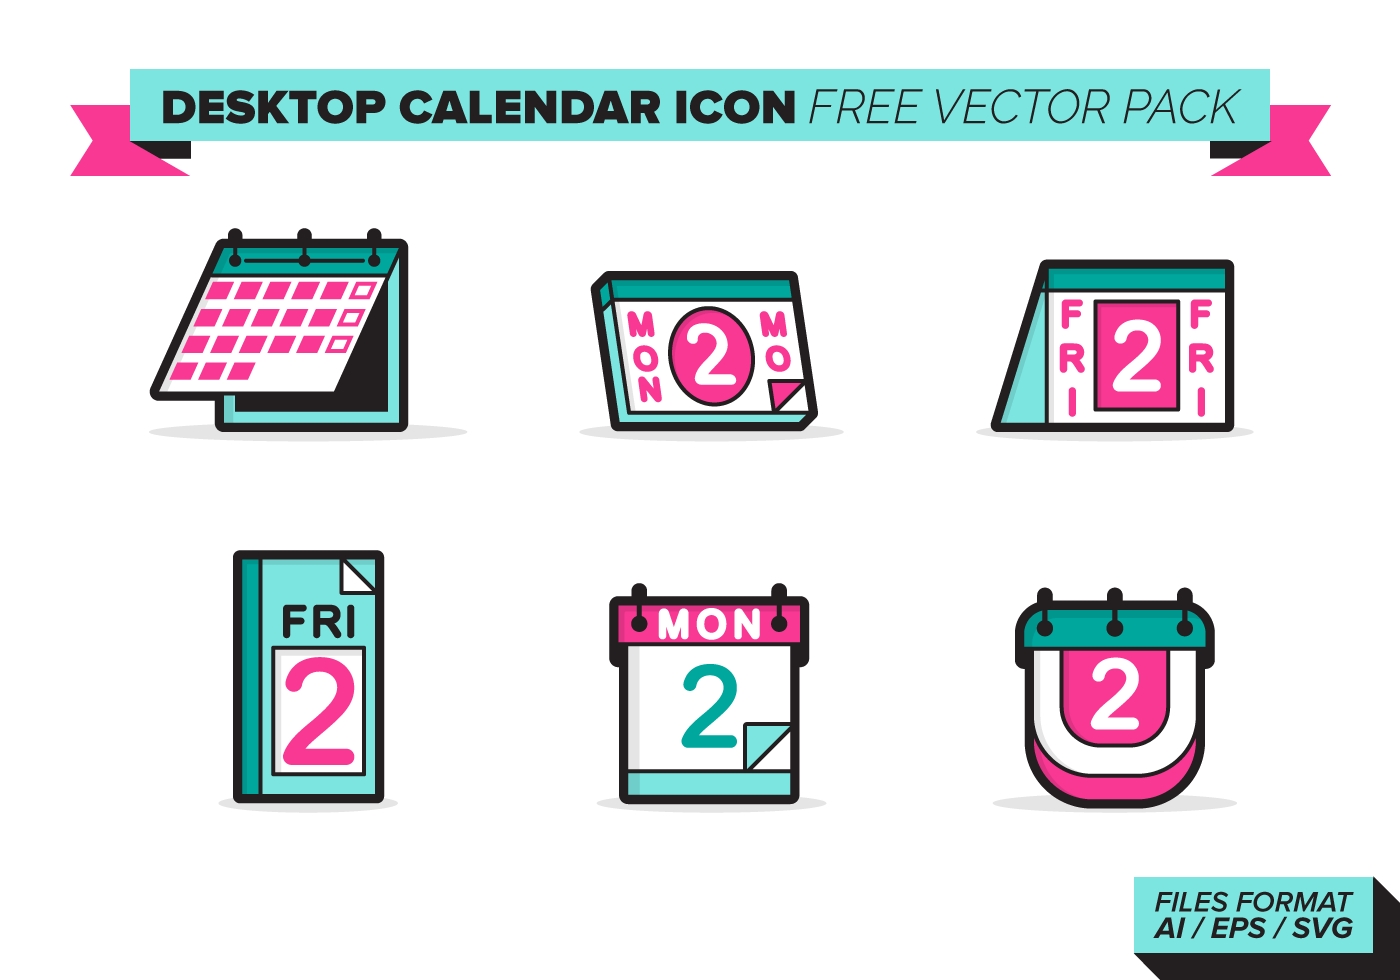 Desktop Calendar Icon Vector Pack - Download Free Vector Art, Stock Calendar Icon On Desktop